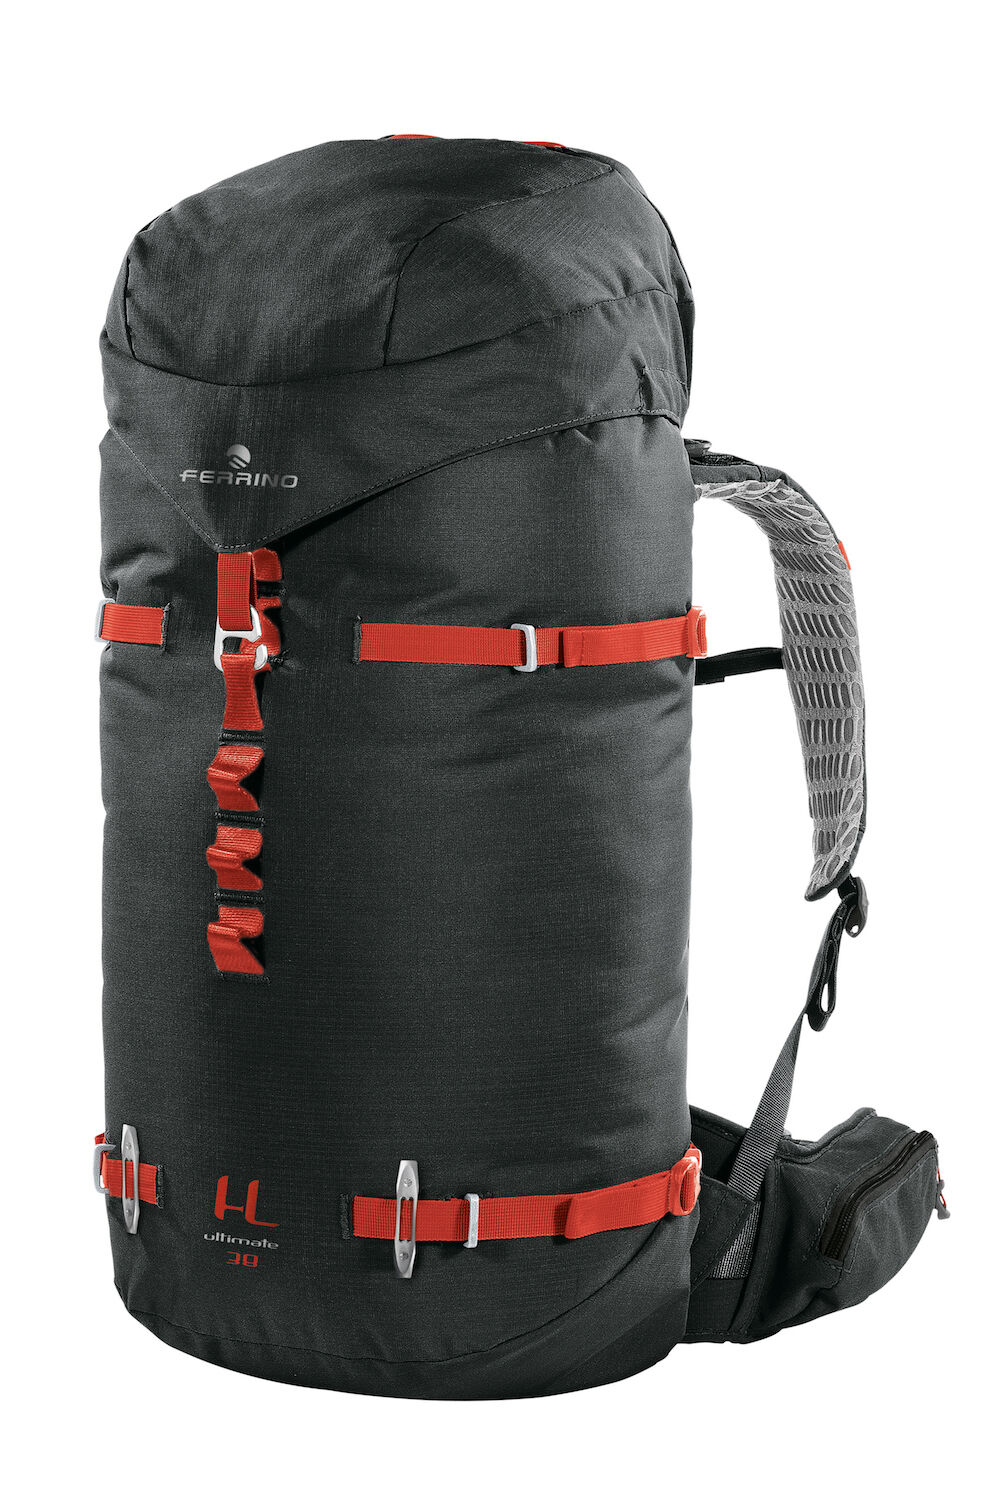 Ferrino Ultimate 38 - Touring backpack